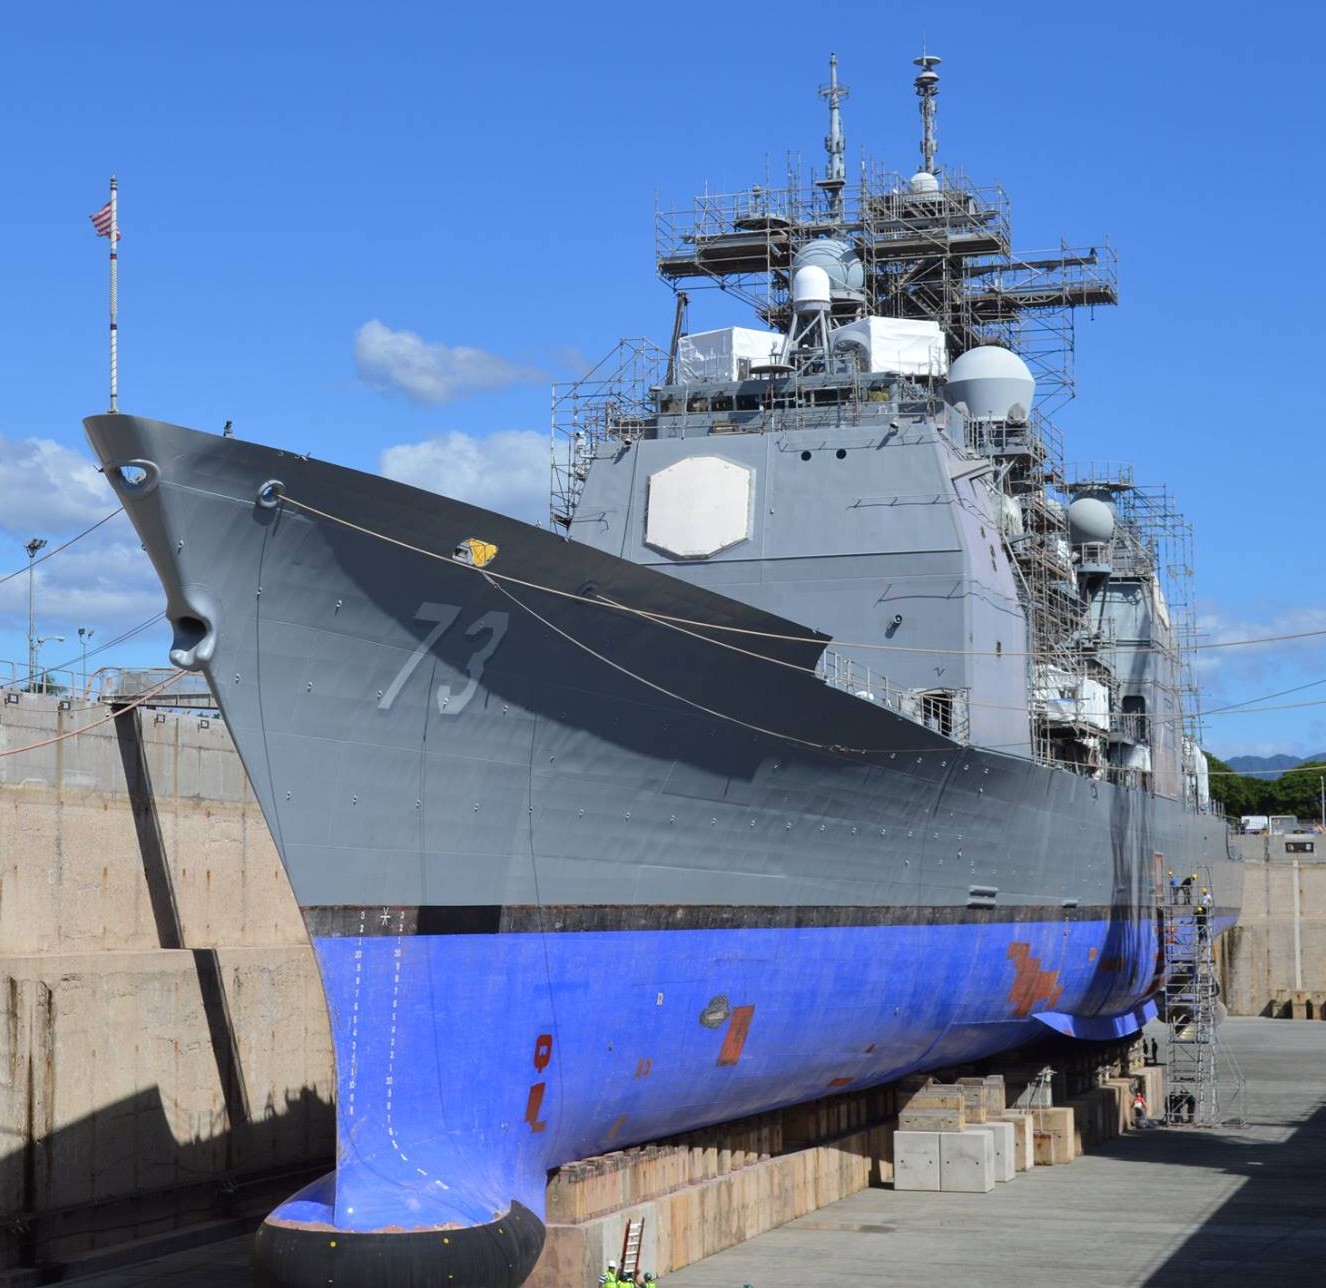 cg-73 uss port royal ticonderoga class guided missile cruiser navy 59 dry dock pearl harbor naval shipyard hawaii